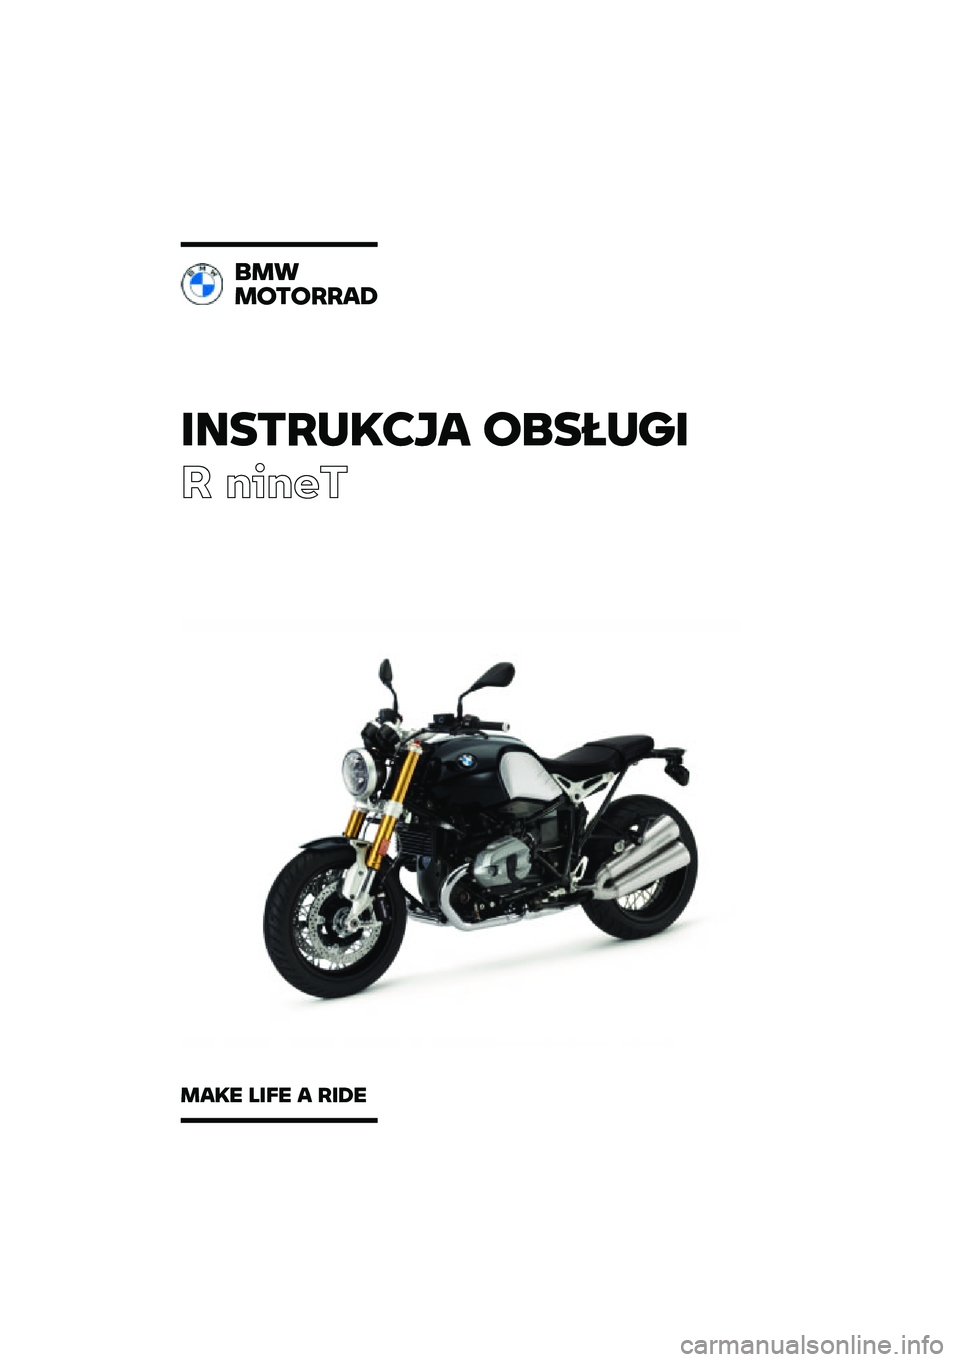 BMW MOTORRAD R NINE T 2021  Instrukcja obsługi (in Polish) �������\b�	�
� �\f�
�����
� �����
�
��
��\f��\f����
���\b� ���� � ���� 